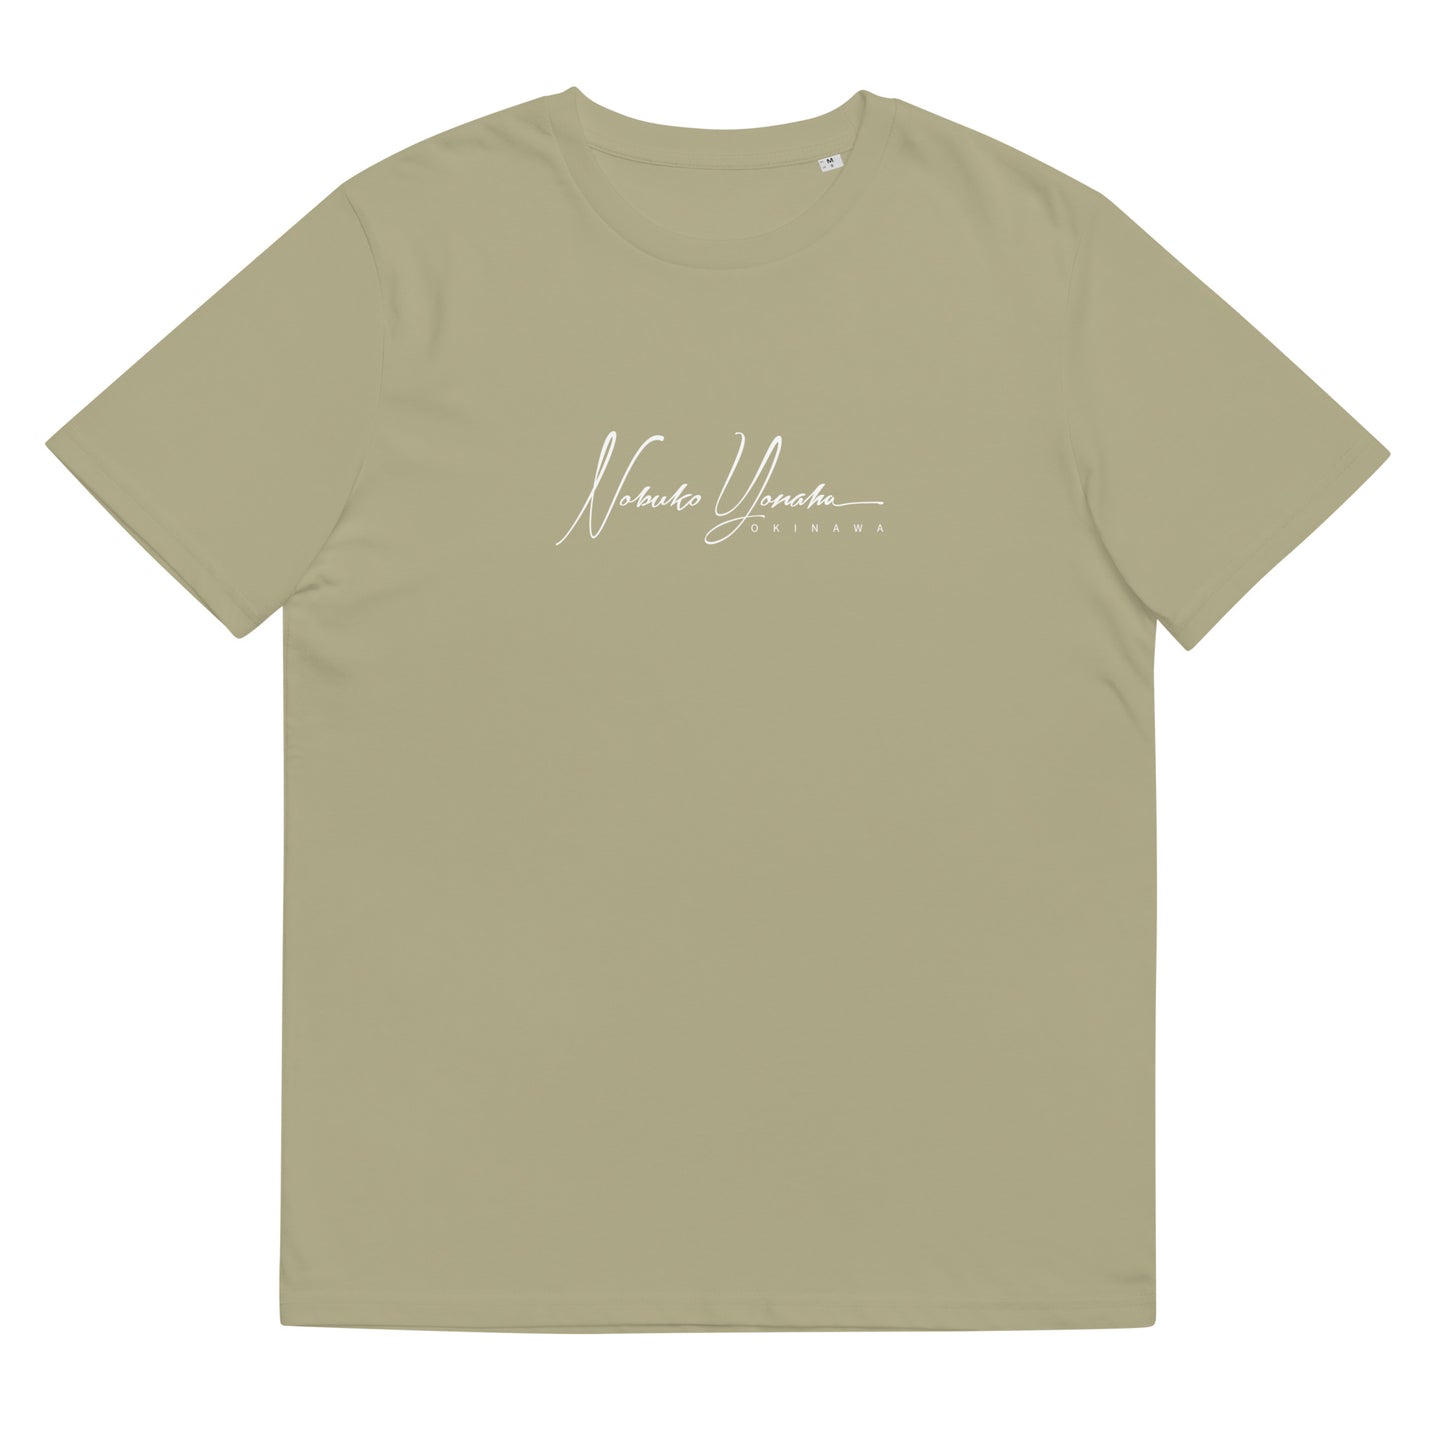 Yonaha Signature  t-shirt